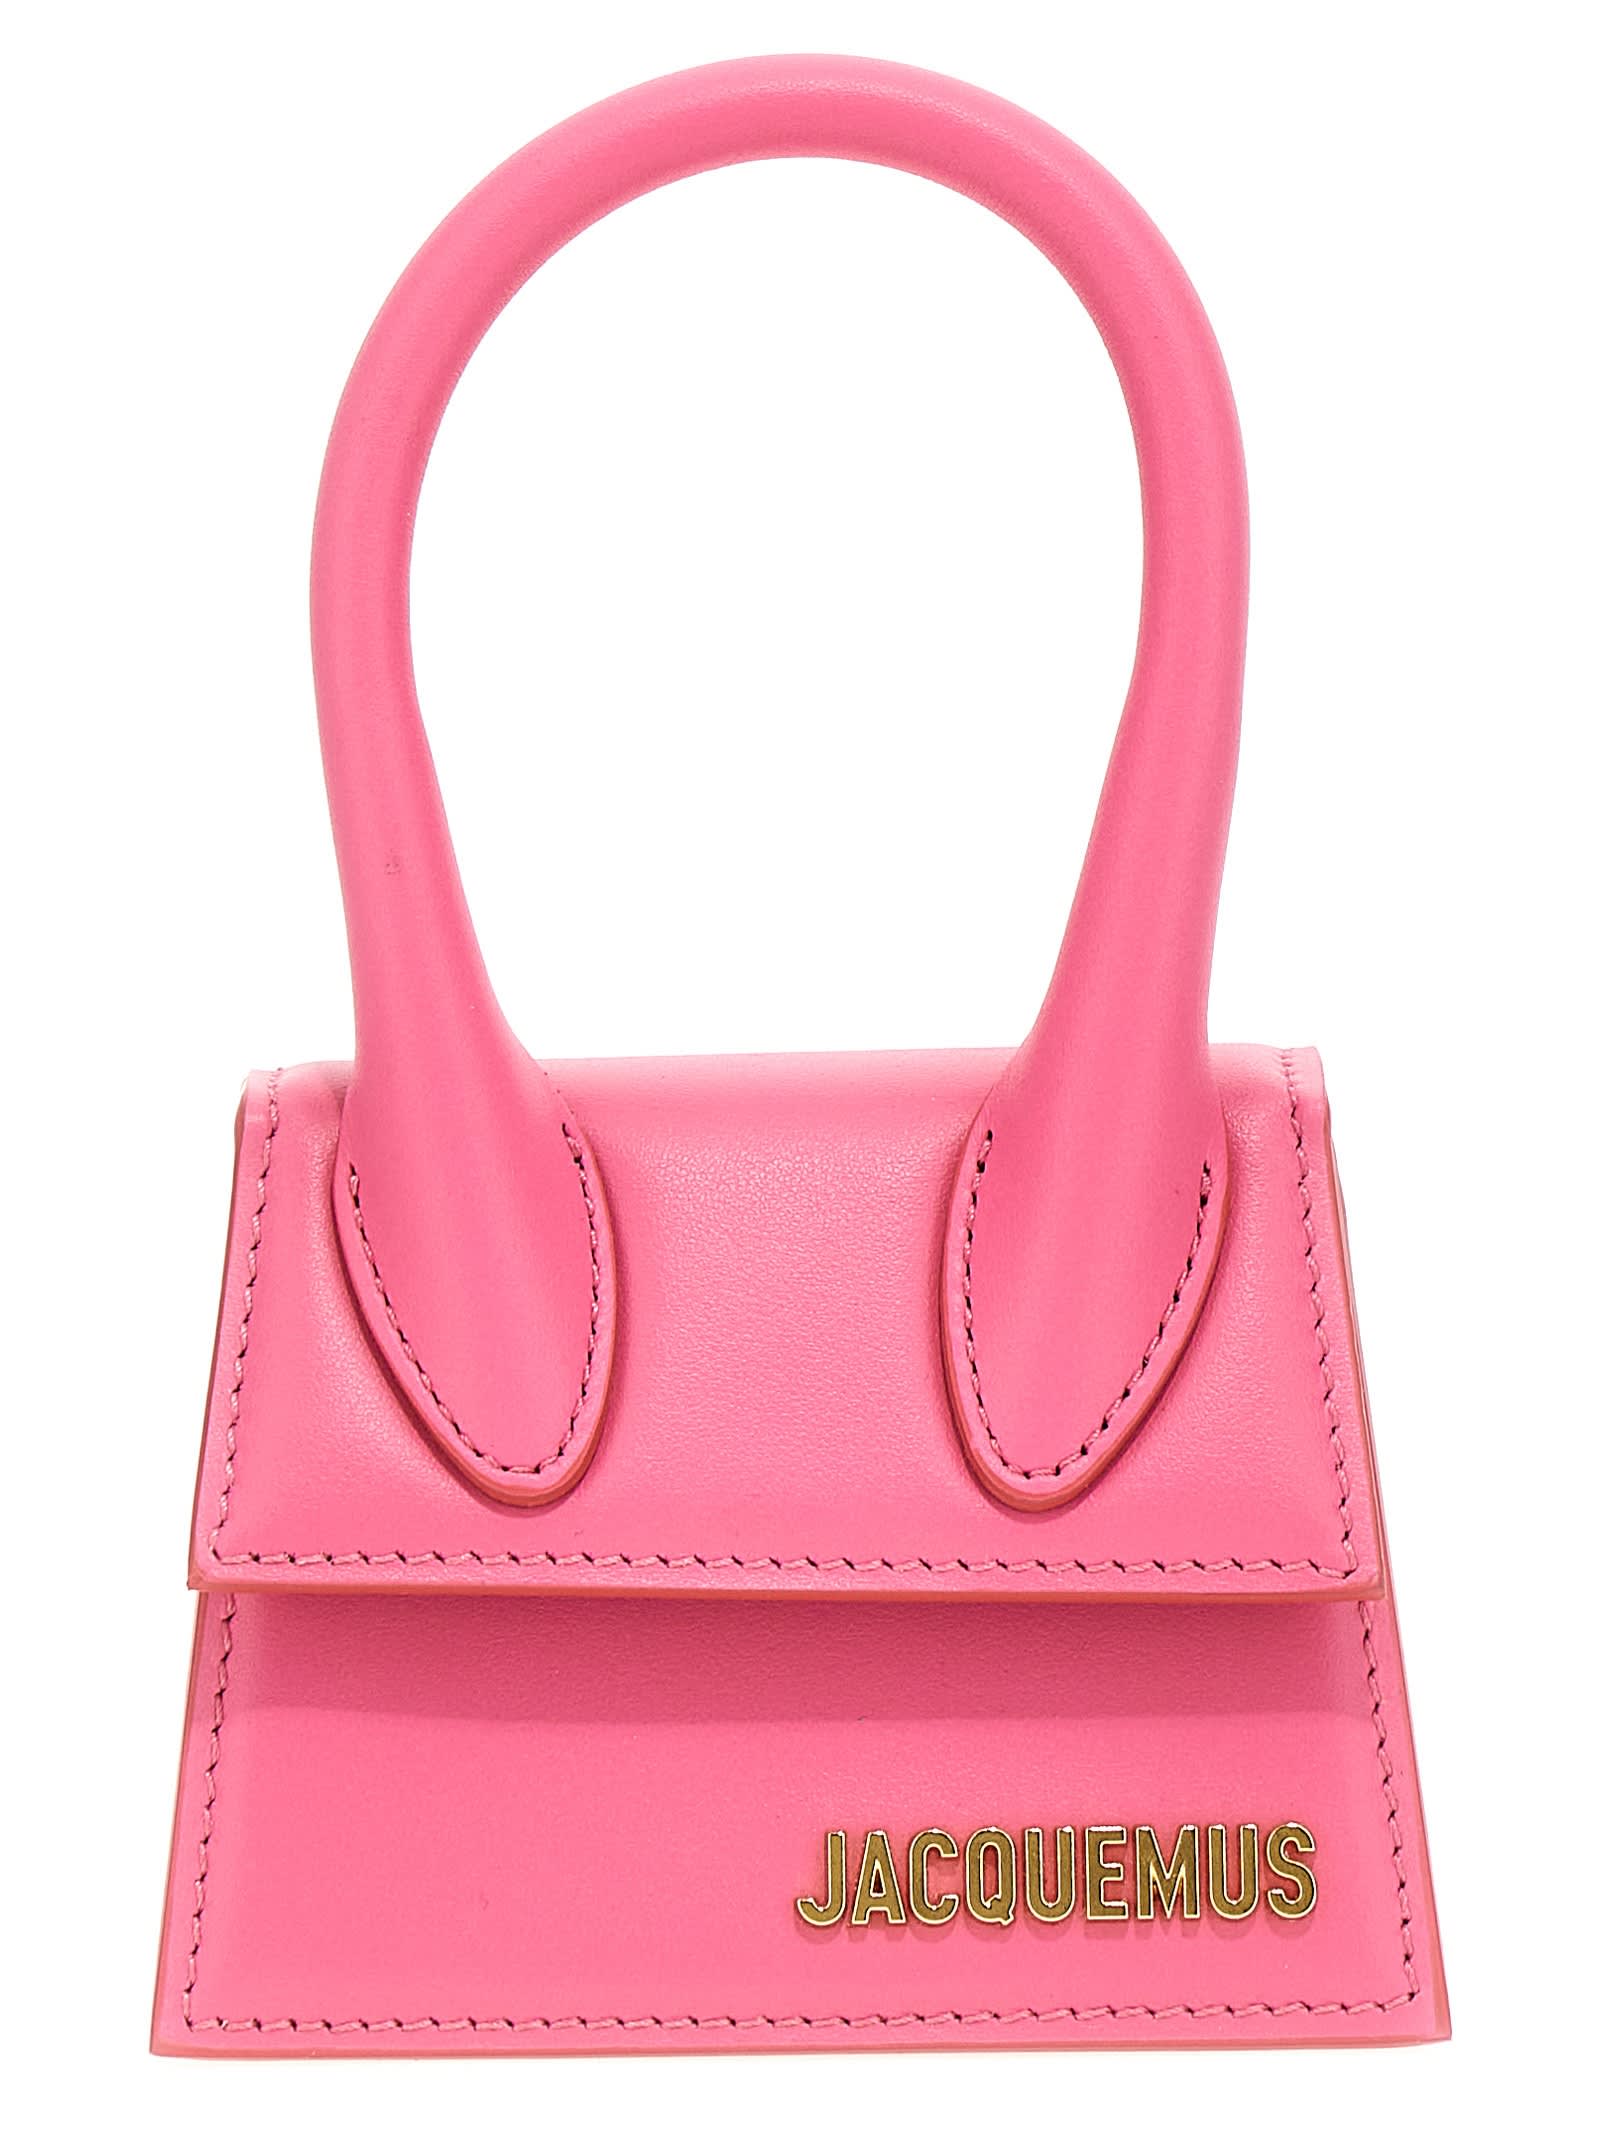 Jacquemus Le Chiquito Handbag In Pink